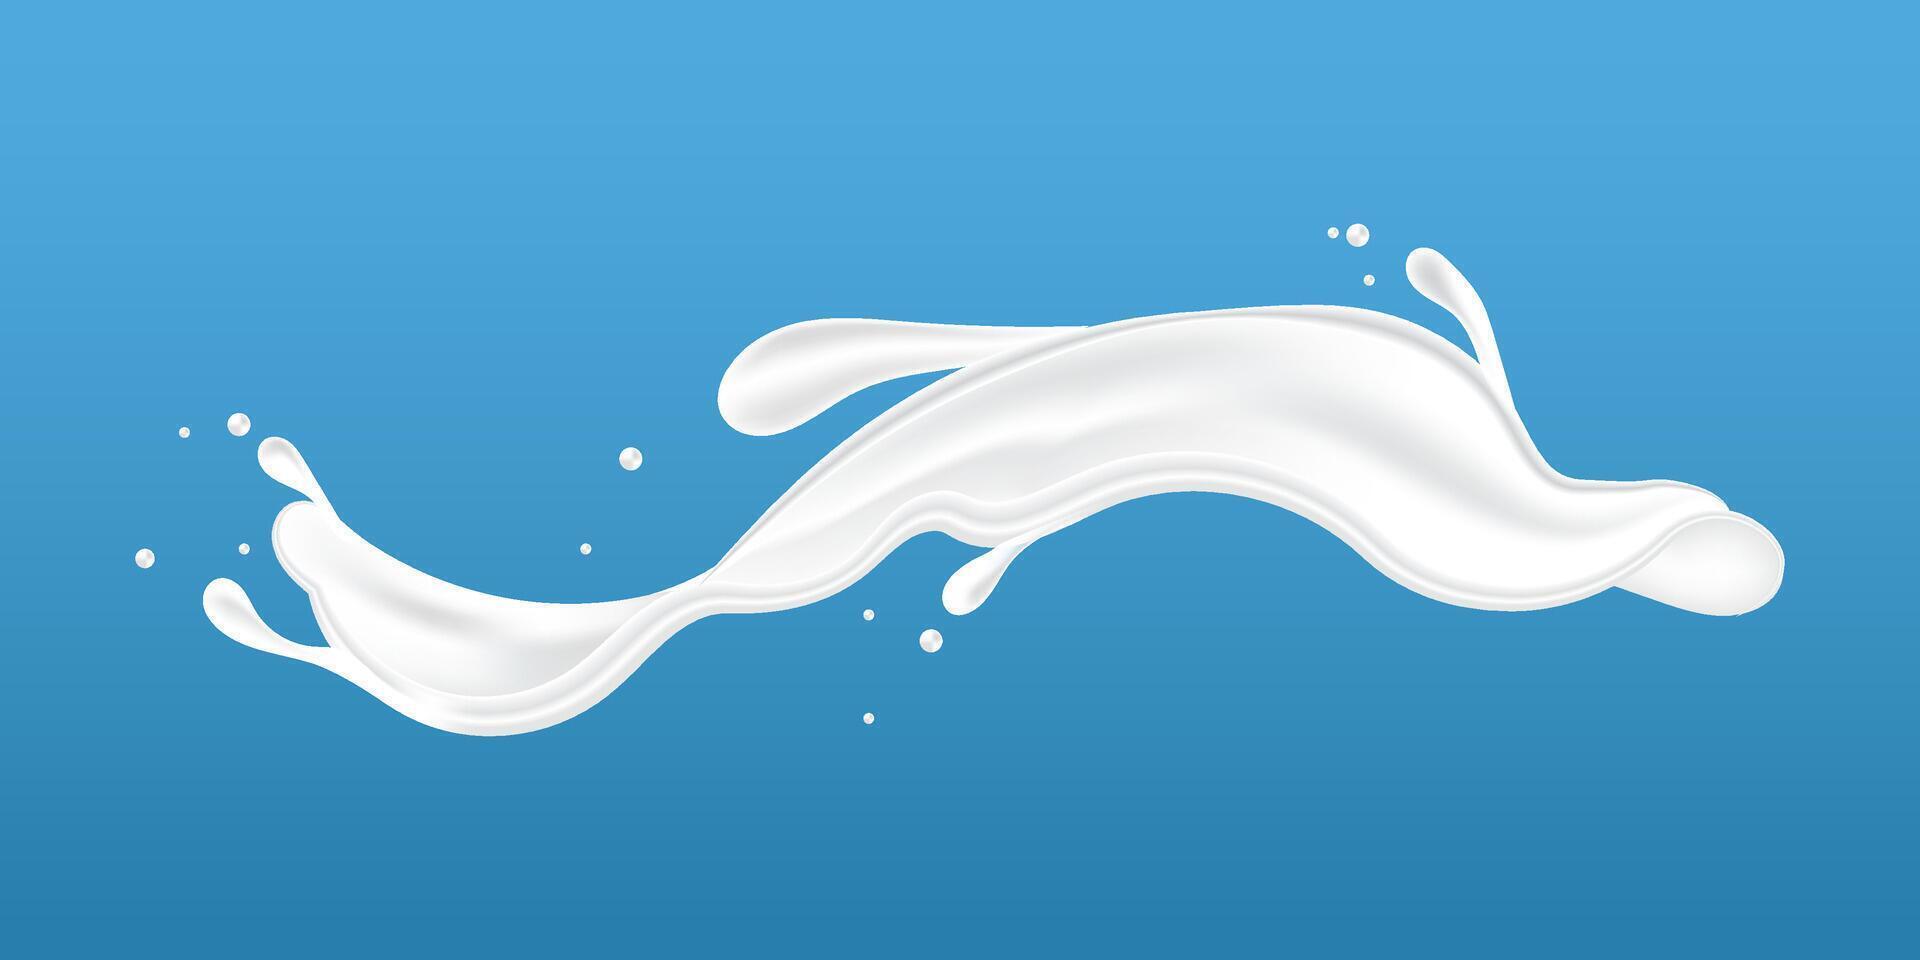 mjölkig vågor. ytterligare element av mjölk design vektor